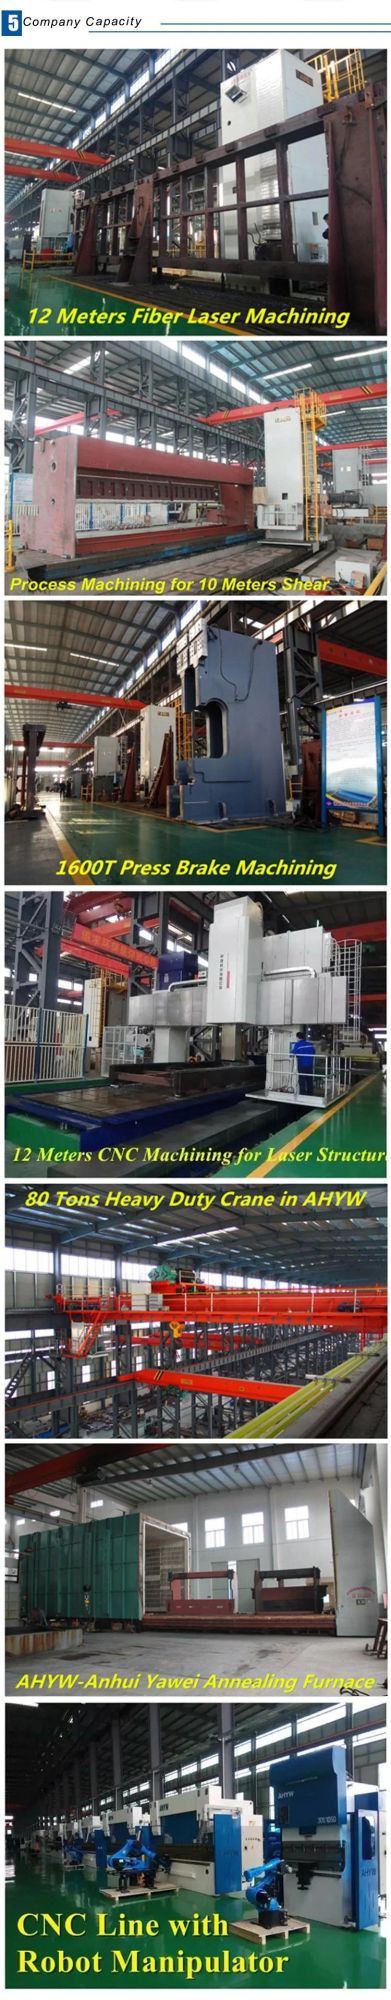 Automatic Sheet Metal CNC Bending Machine with 3 Axis Da41 Controller